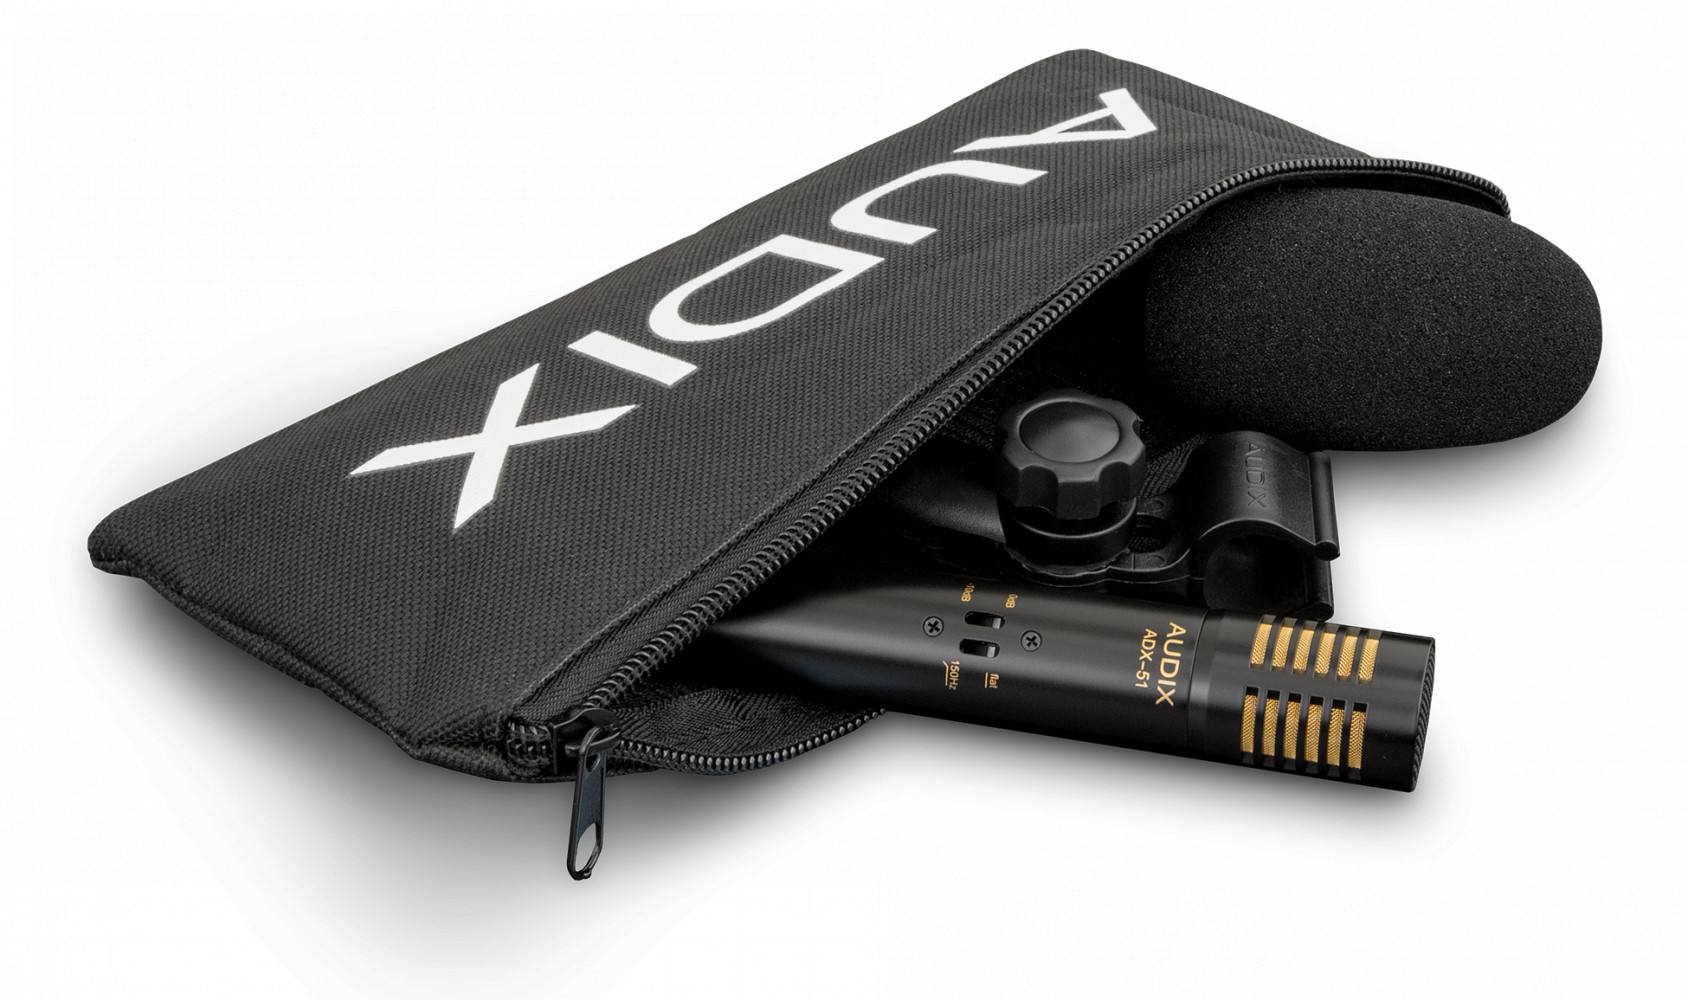 Audix ADX51 Small-Diaphragm Condenser Instrument Microphone